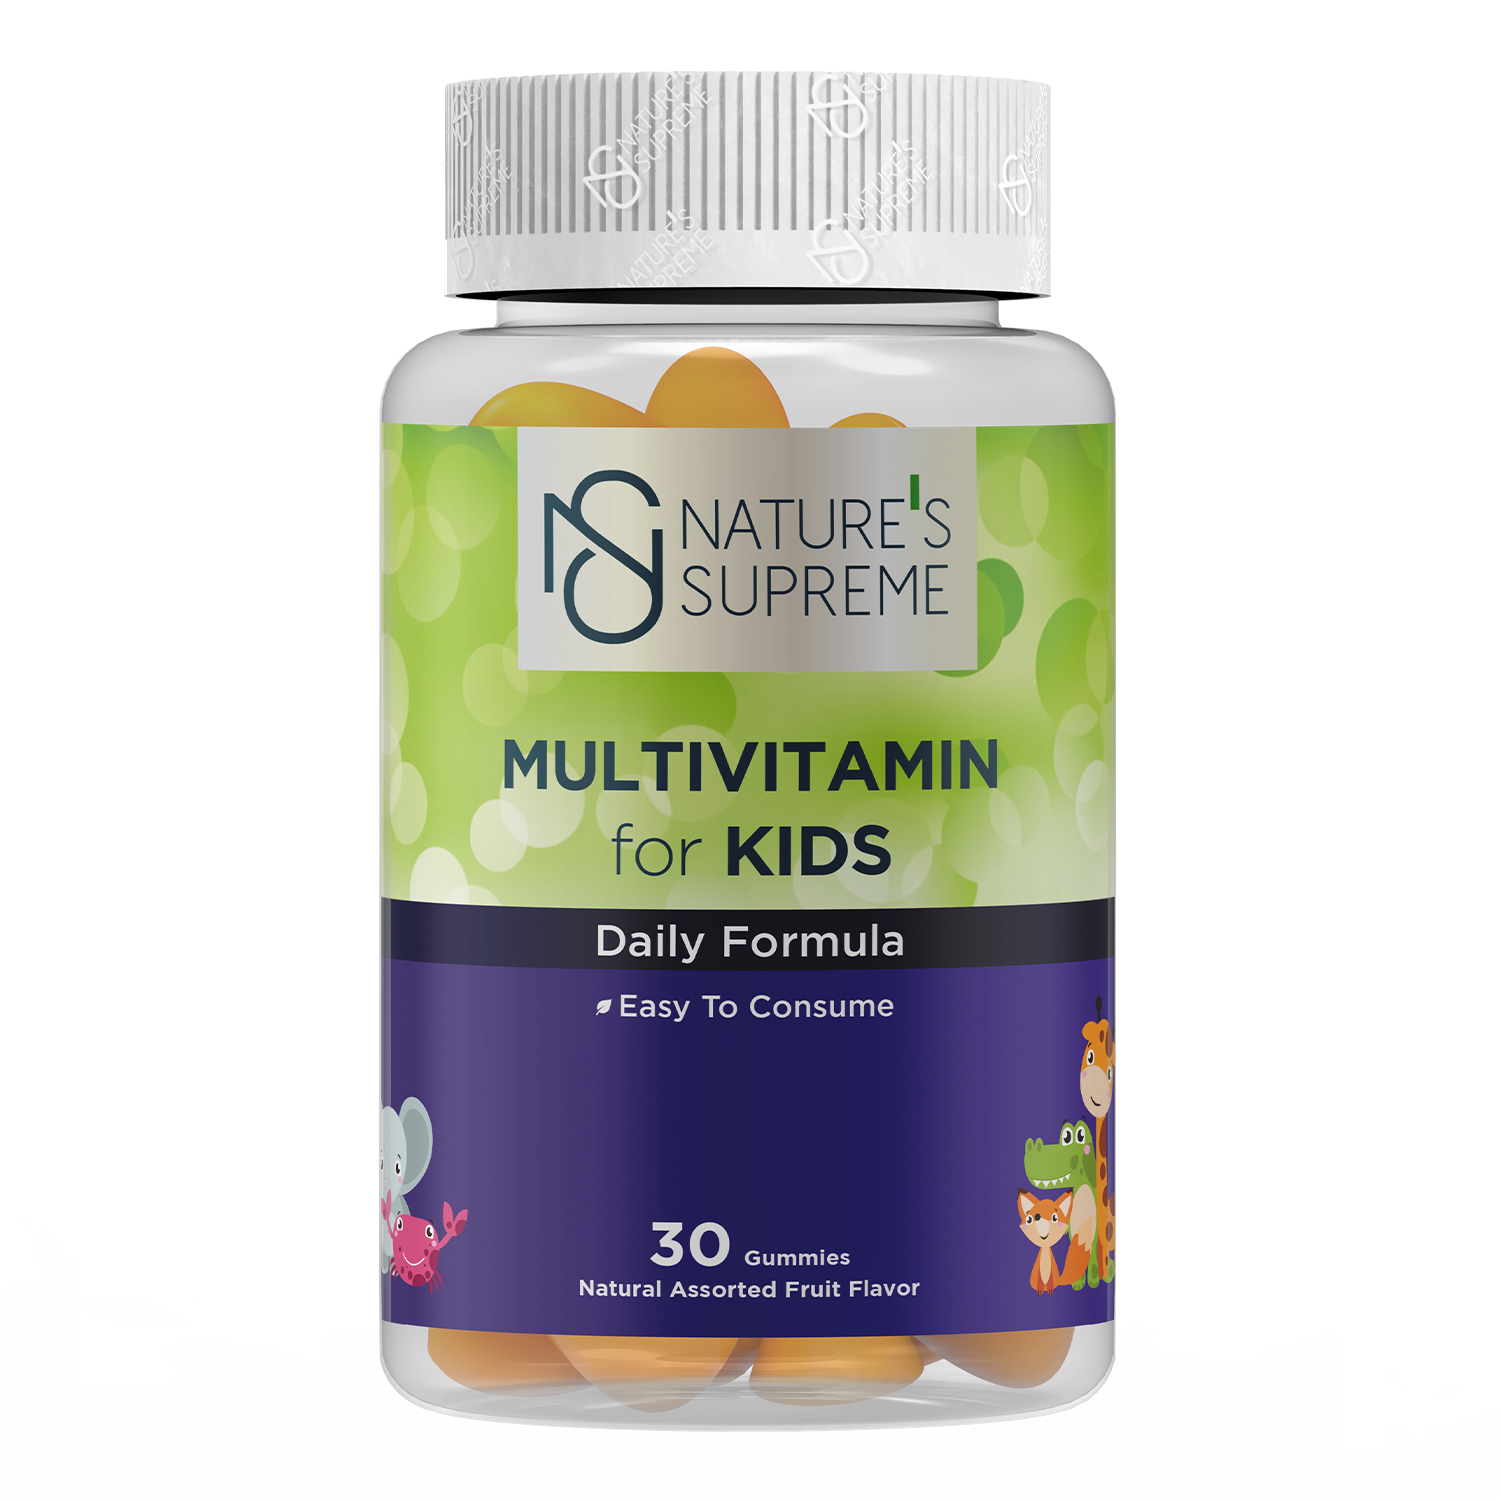 Multivitamin For Kids